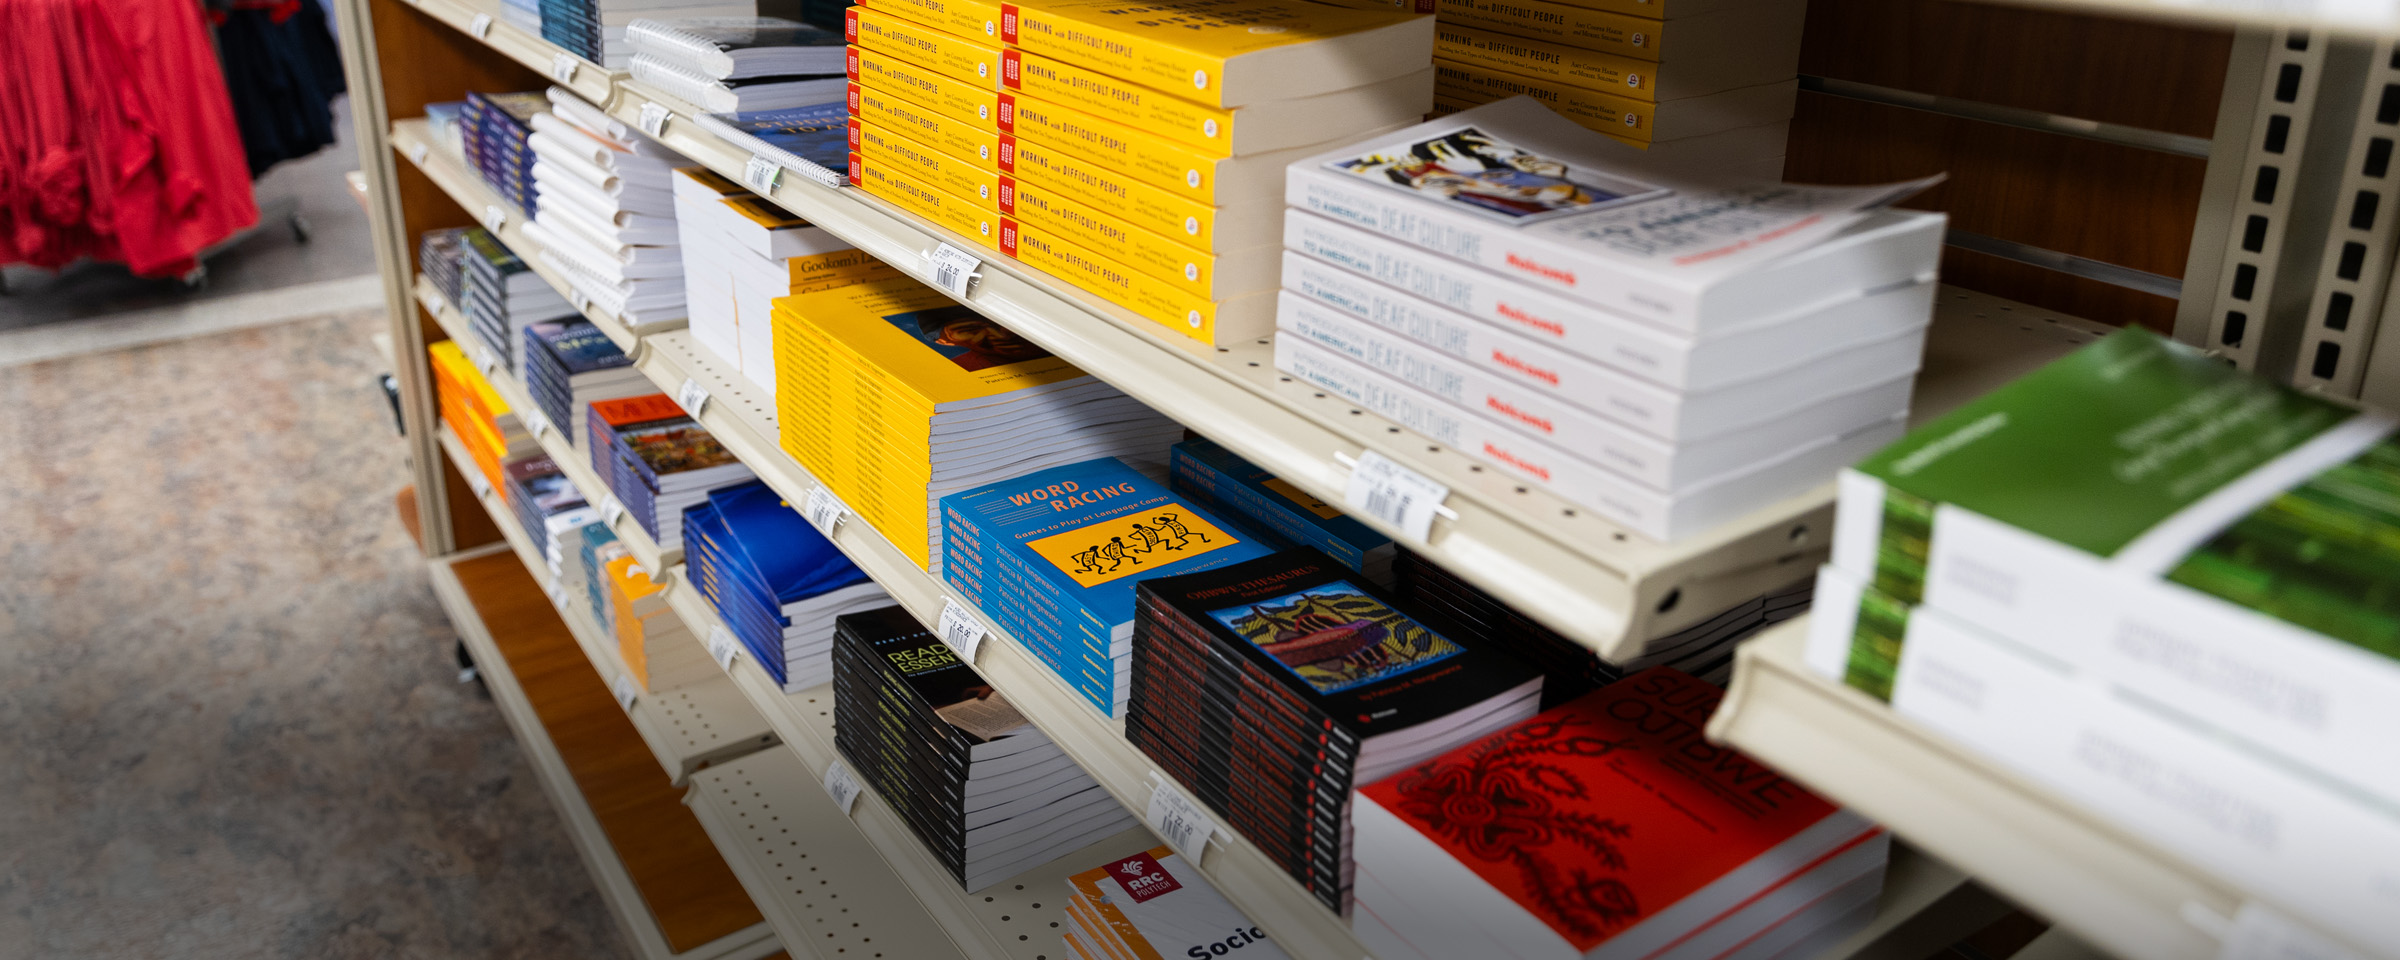 Textbooks on a store shelf